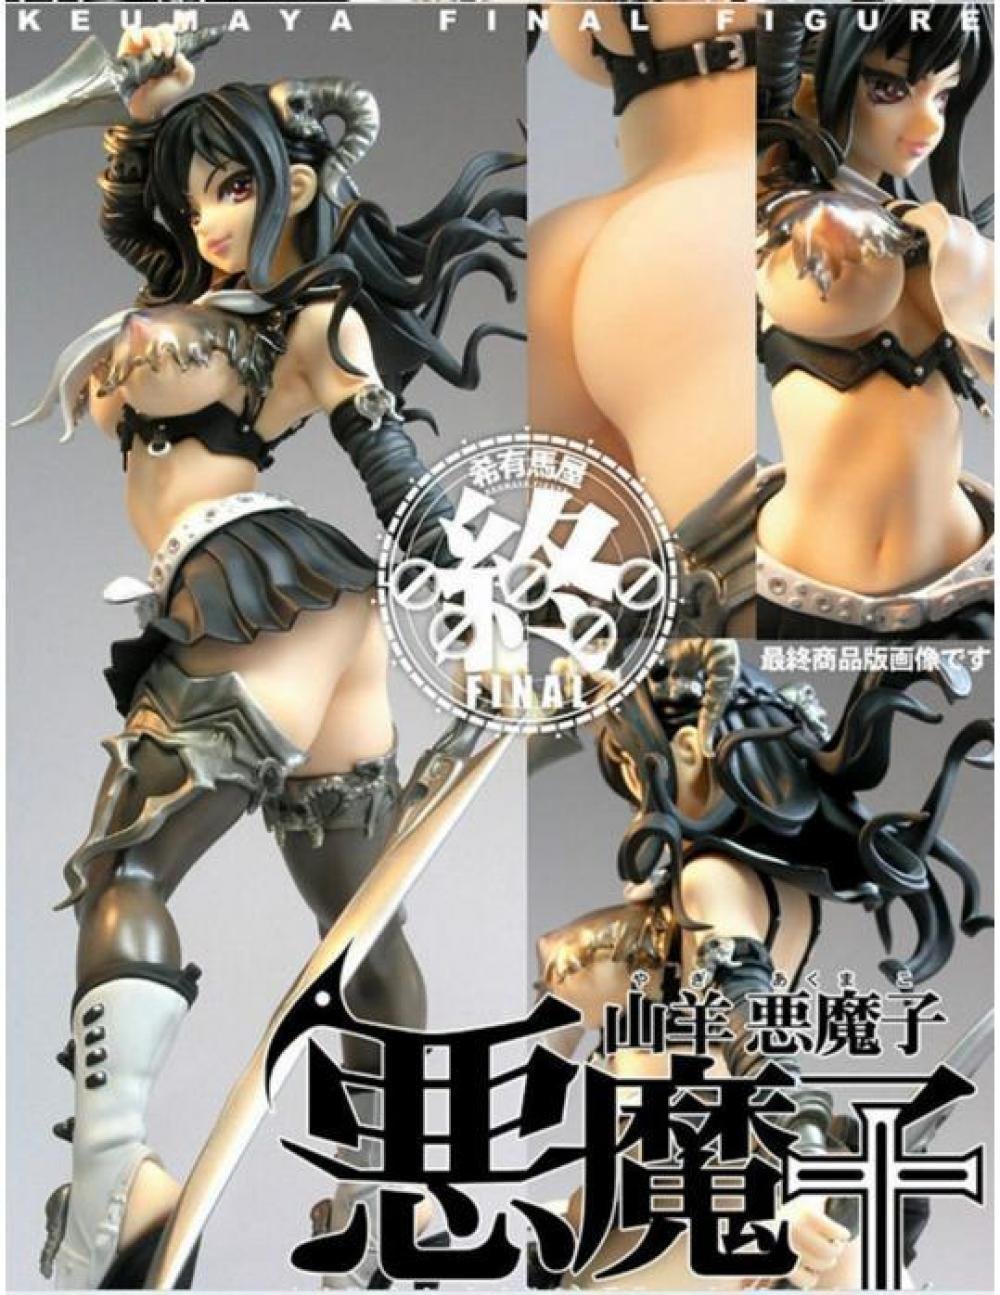 Sexy Japan Anime KEUMAYA Final Figure Model 11 Inch 1/7 Scale Hyper Nurse GAL MAKO BLACK GOAT DAUGH